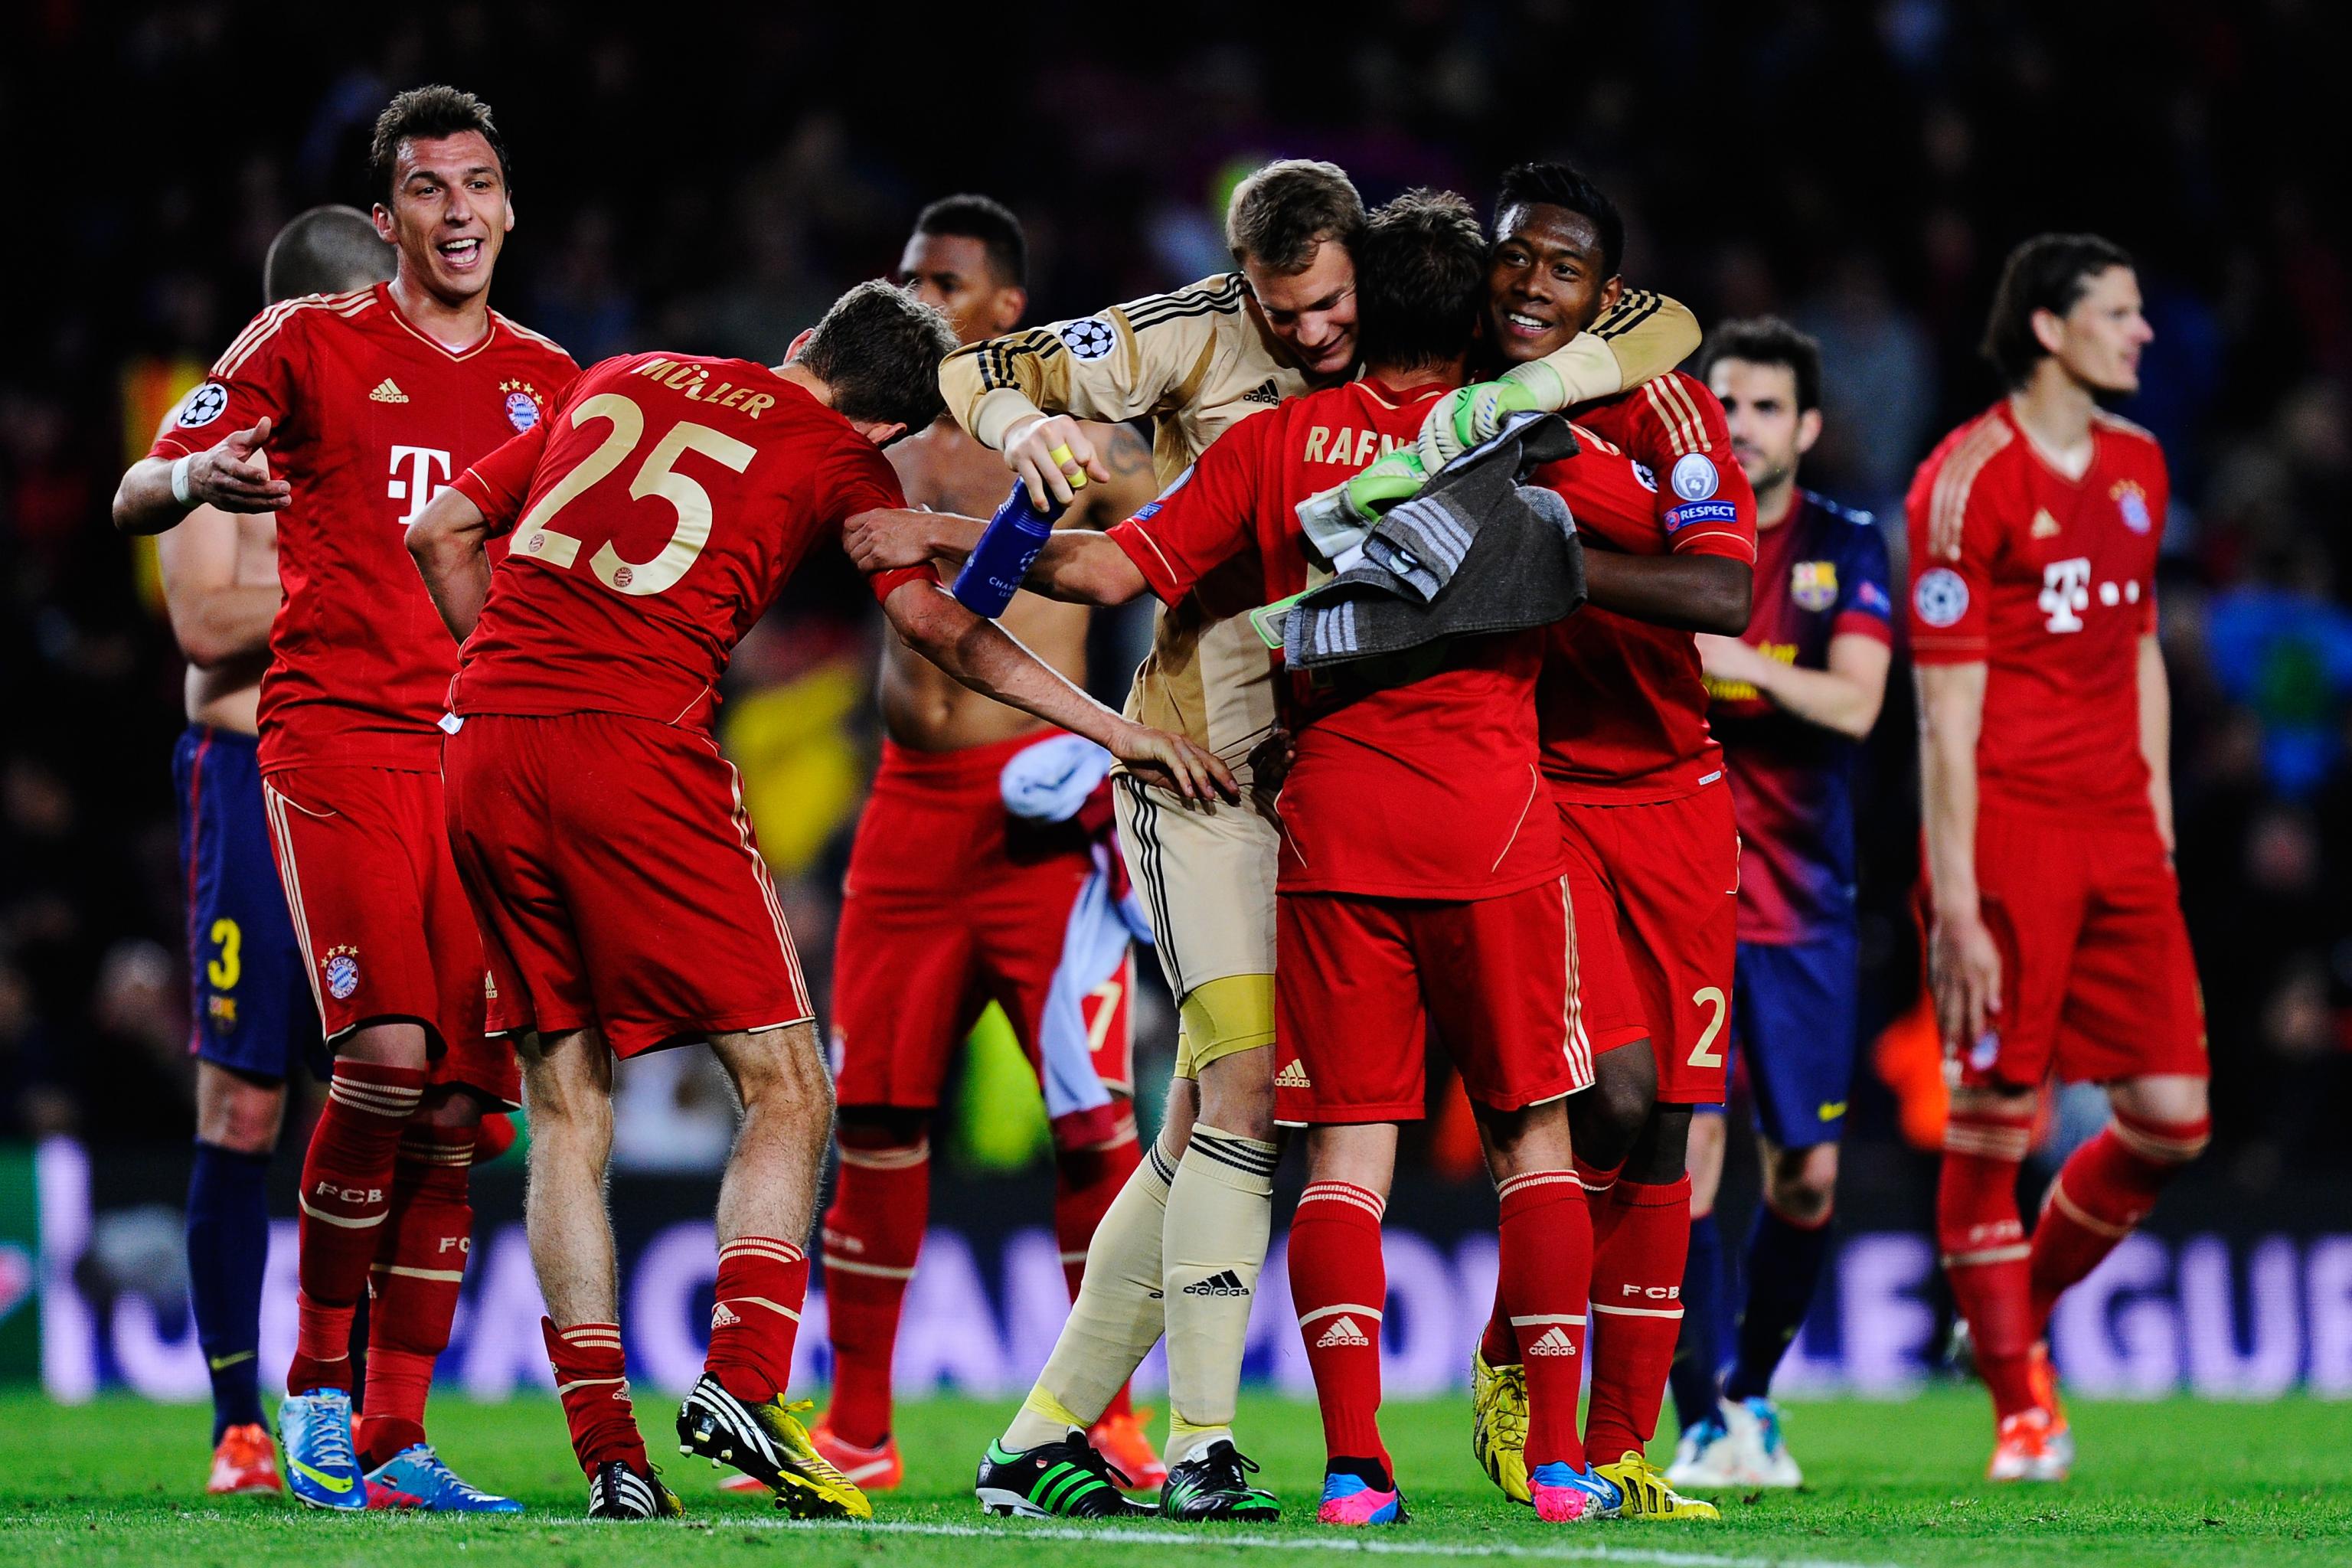 Soccer: Bayern Munich win Champions League (2012–13 season) – Perspective